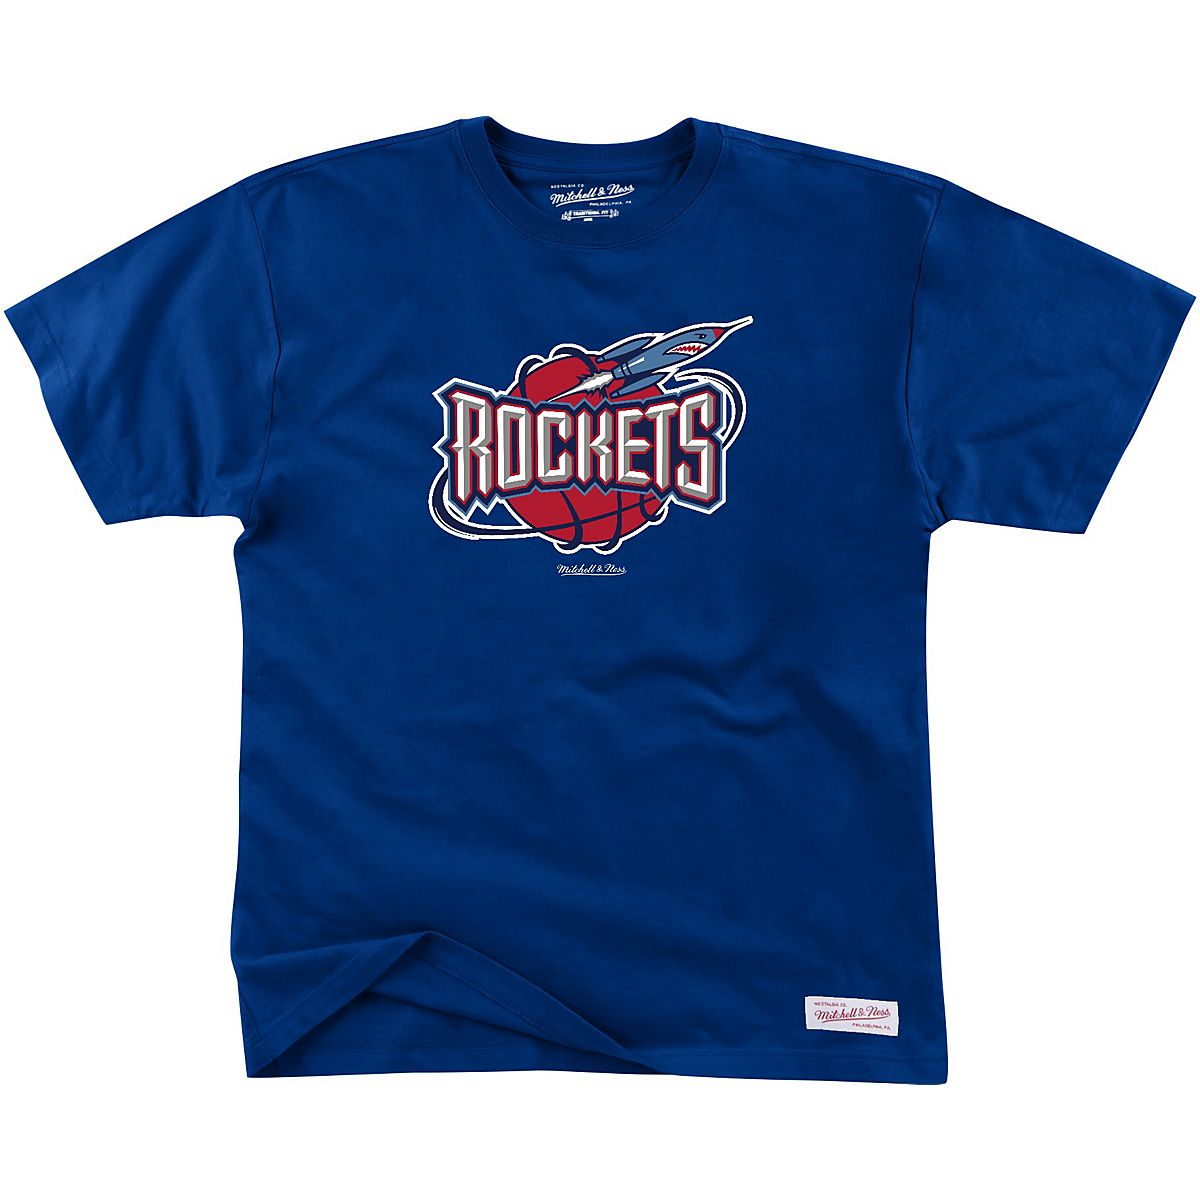 Rockets Shirts Academy Store -  1695951112